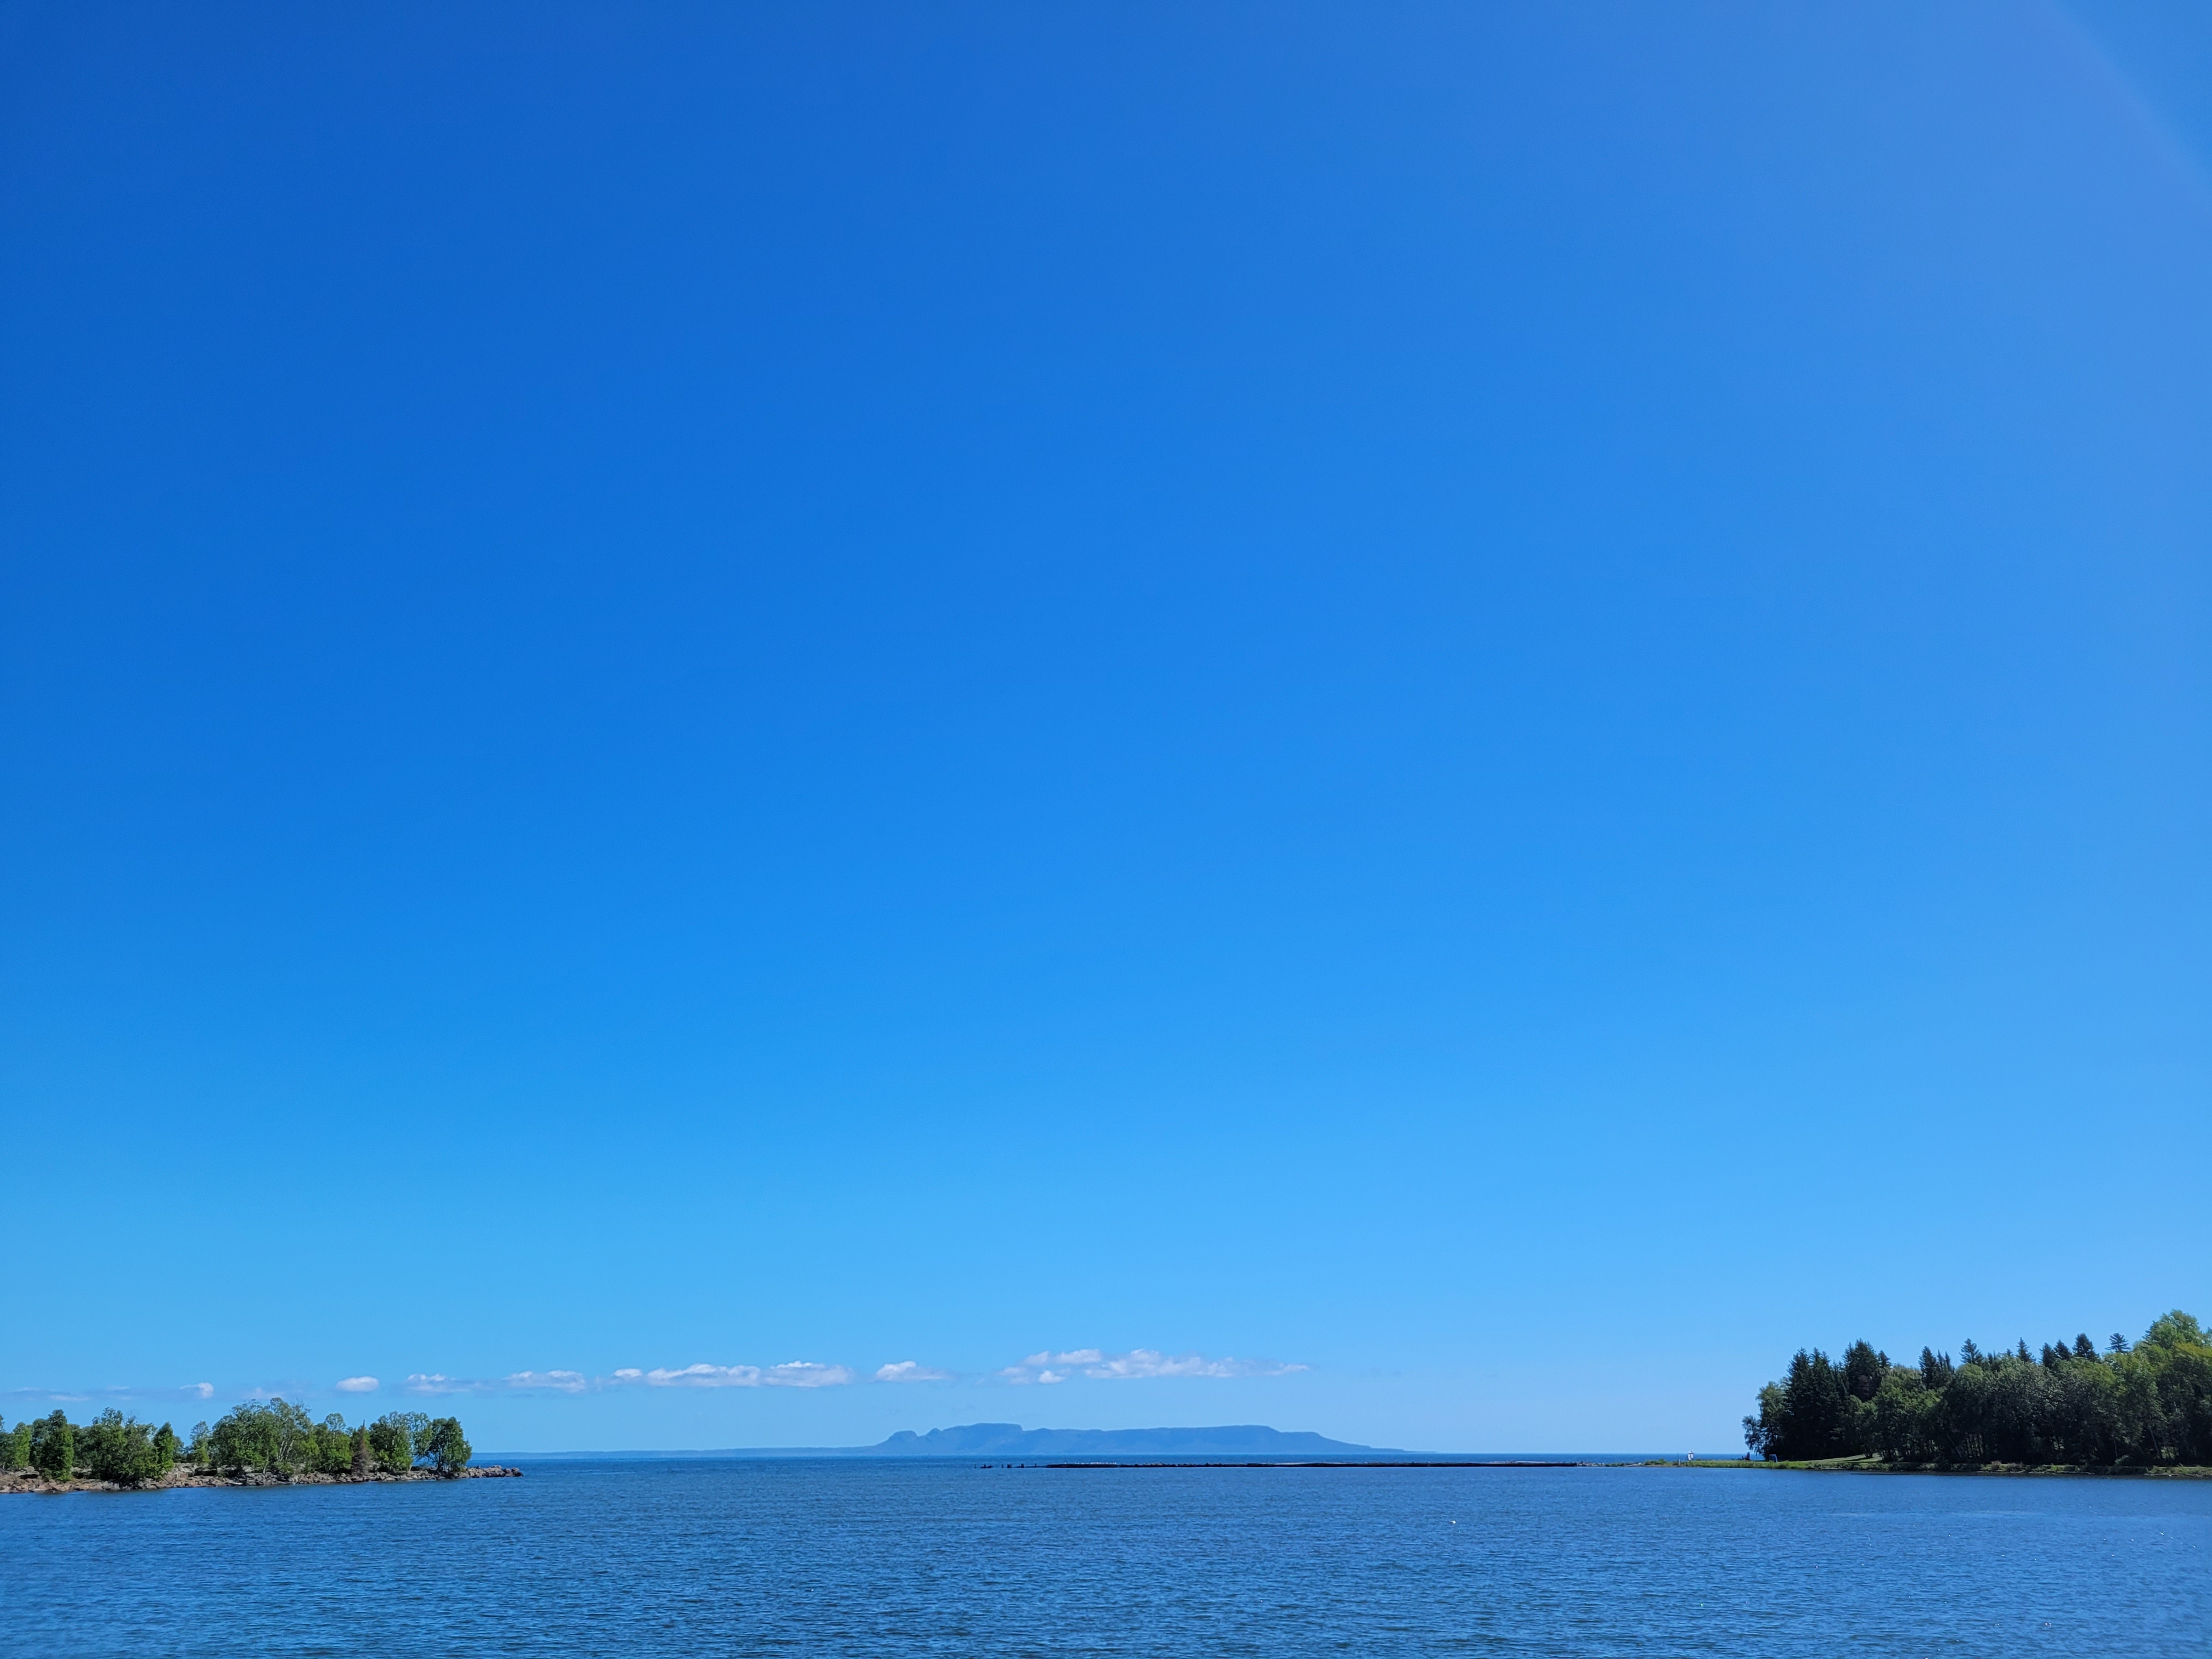 Nature Sleeping Giant Tbay Sky Blue Lake Trees Water Clouds Canada Lake Superior Chippewa Thunder Ba 4032x3024